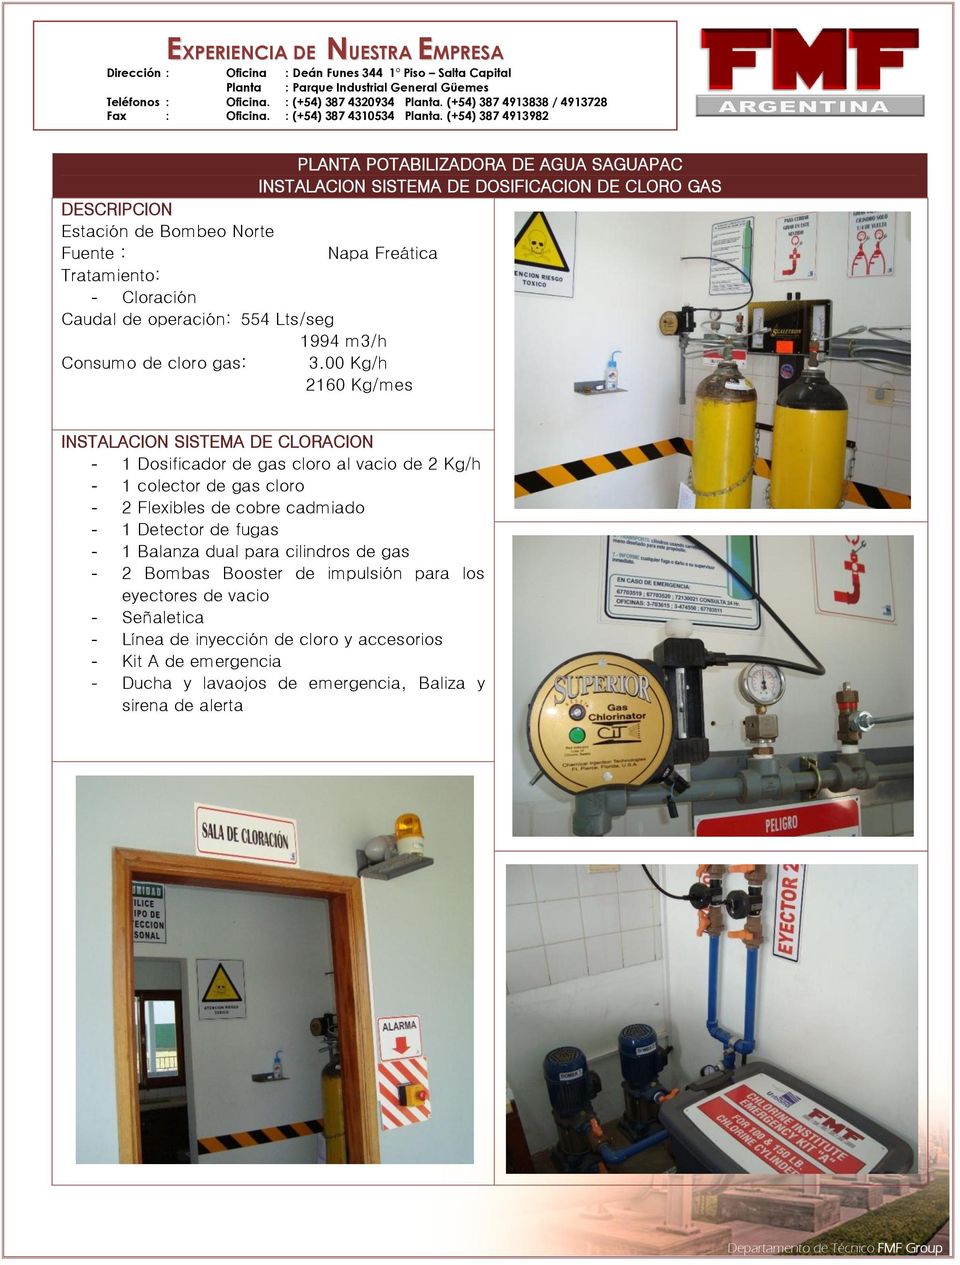 00 Kg/h 2160 Kg/mes - 1 Dosificador de gas cloro al vacio de 2 Kg/h - 1 colector de gas cloro - 2 Flexibles de cobre cadmiado - 1 Detector de fugas -